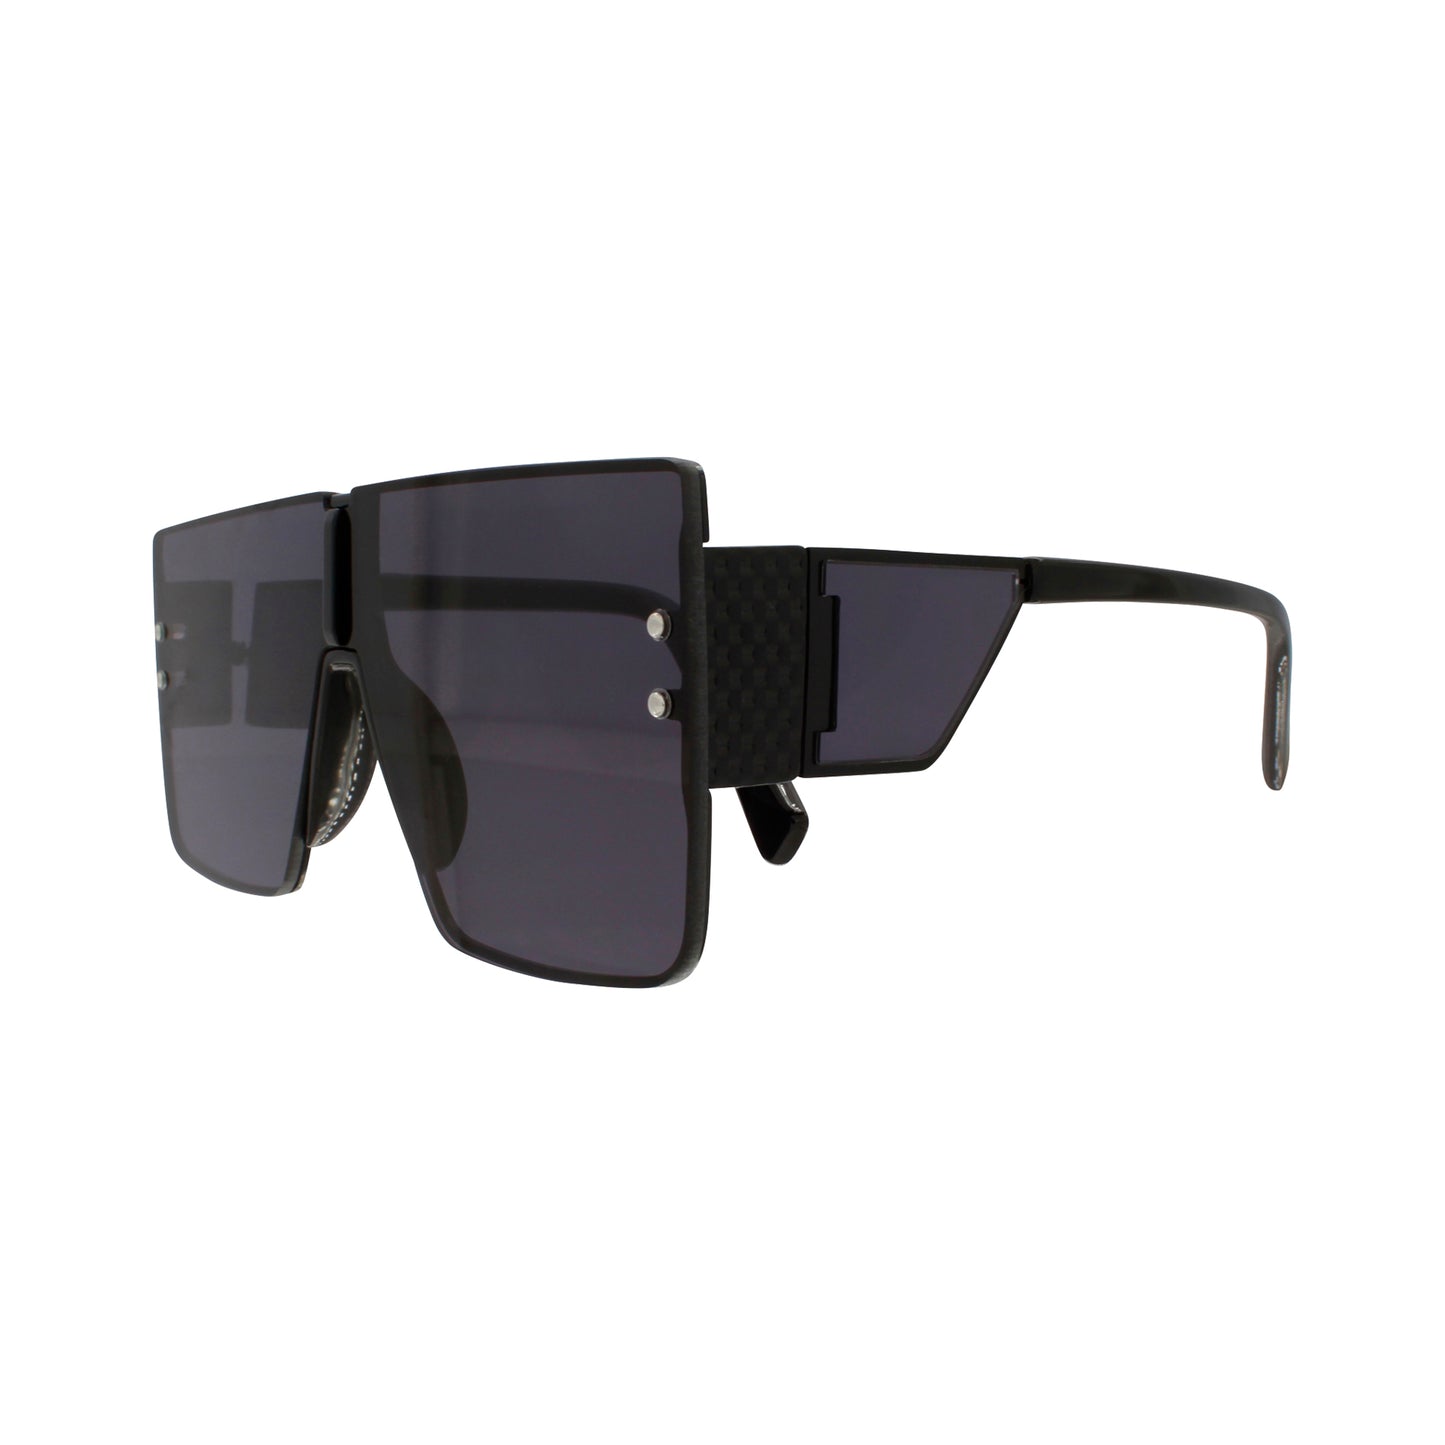 Scarlet Black Sunglasses UV400 Protection